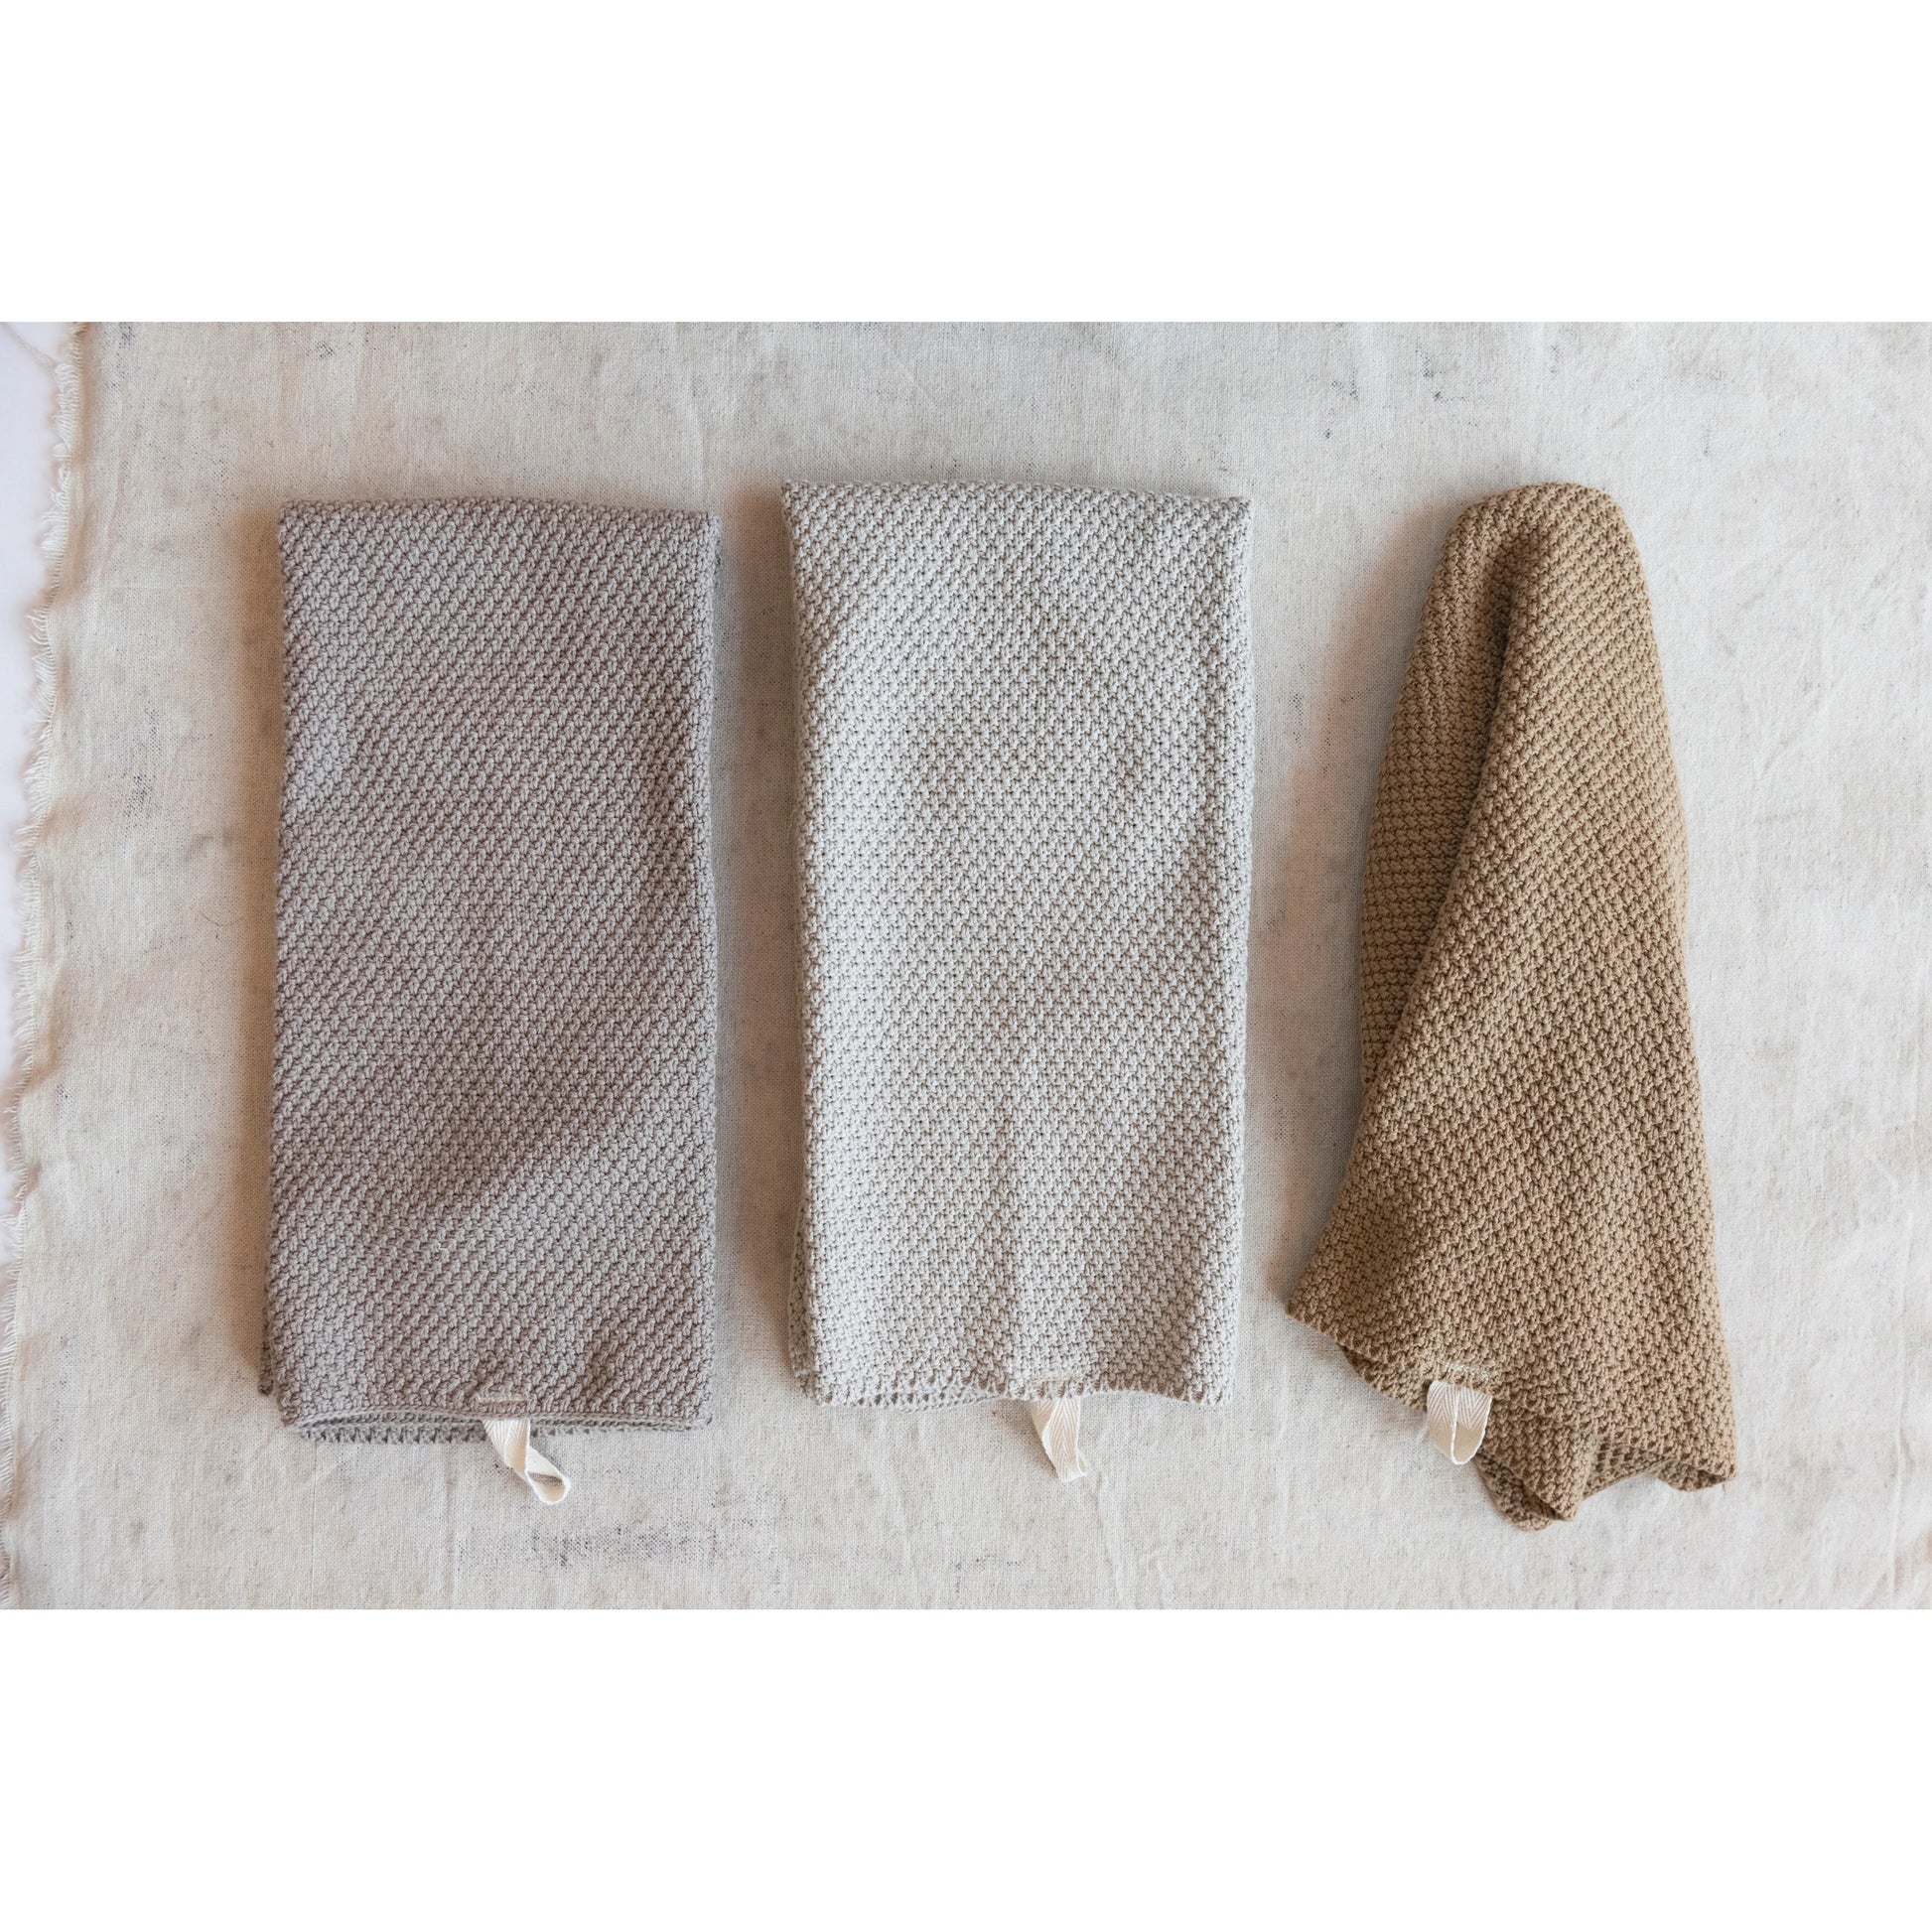 3 knit hand towels, 2 folded, 1 slightly unfolded, on a linen backdrop.